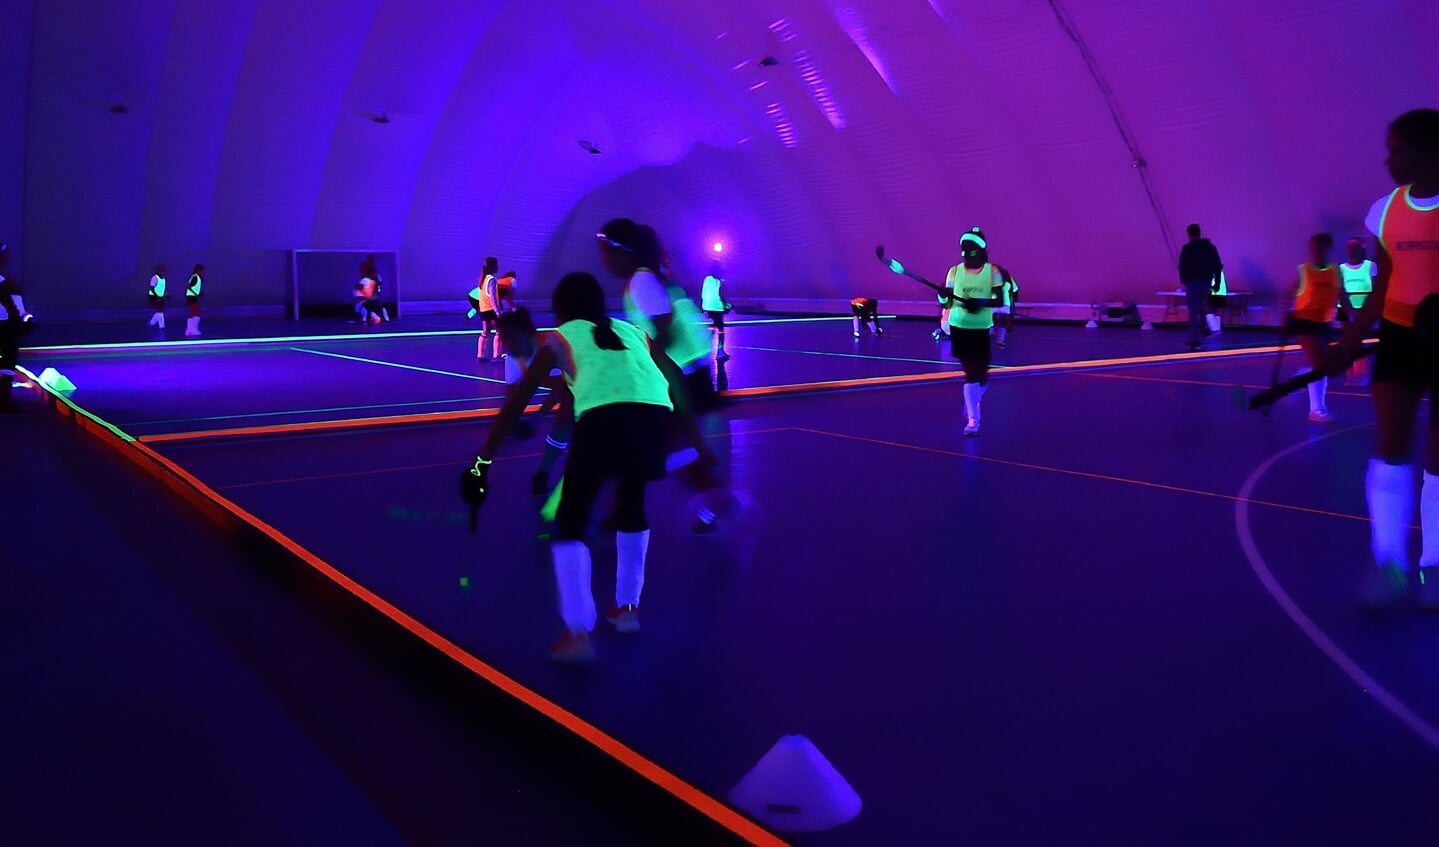 ‘Glow in the dark’ hockeytoernooi